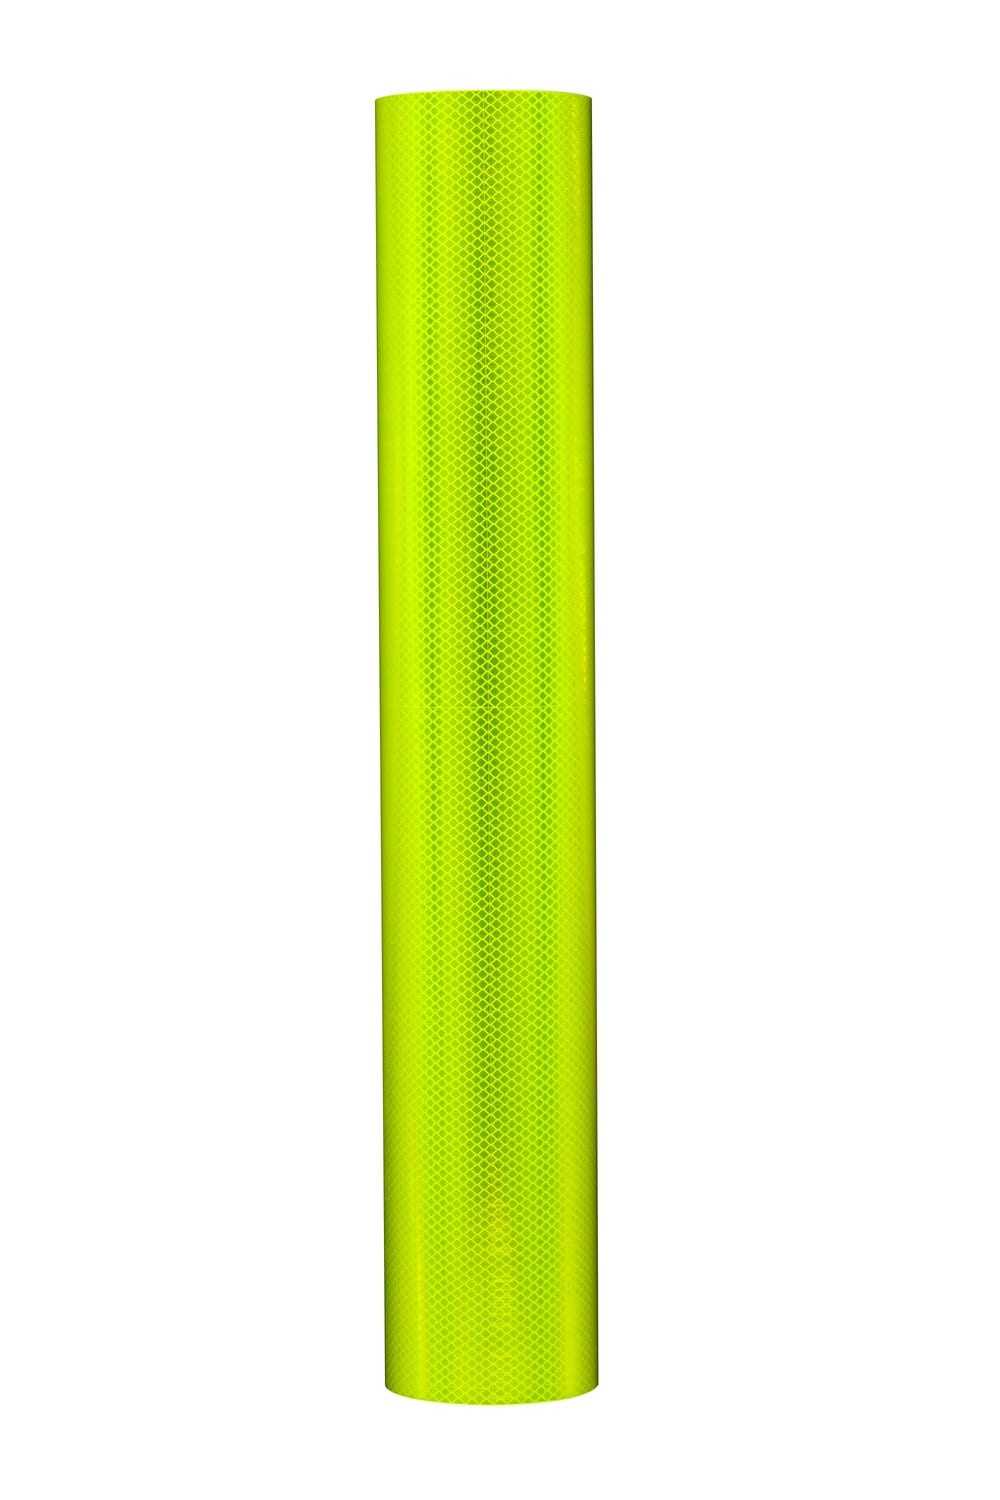 7000030844 - 3M Diamond Grade DG³ Reflective Sheeting 4083 Fluorescent Yellow
Green, 24 in x 50 yd